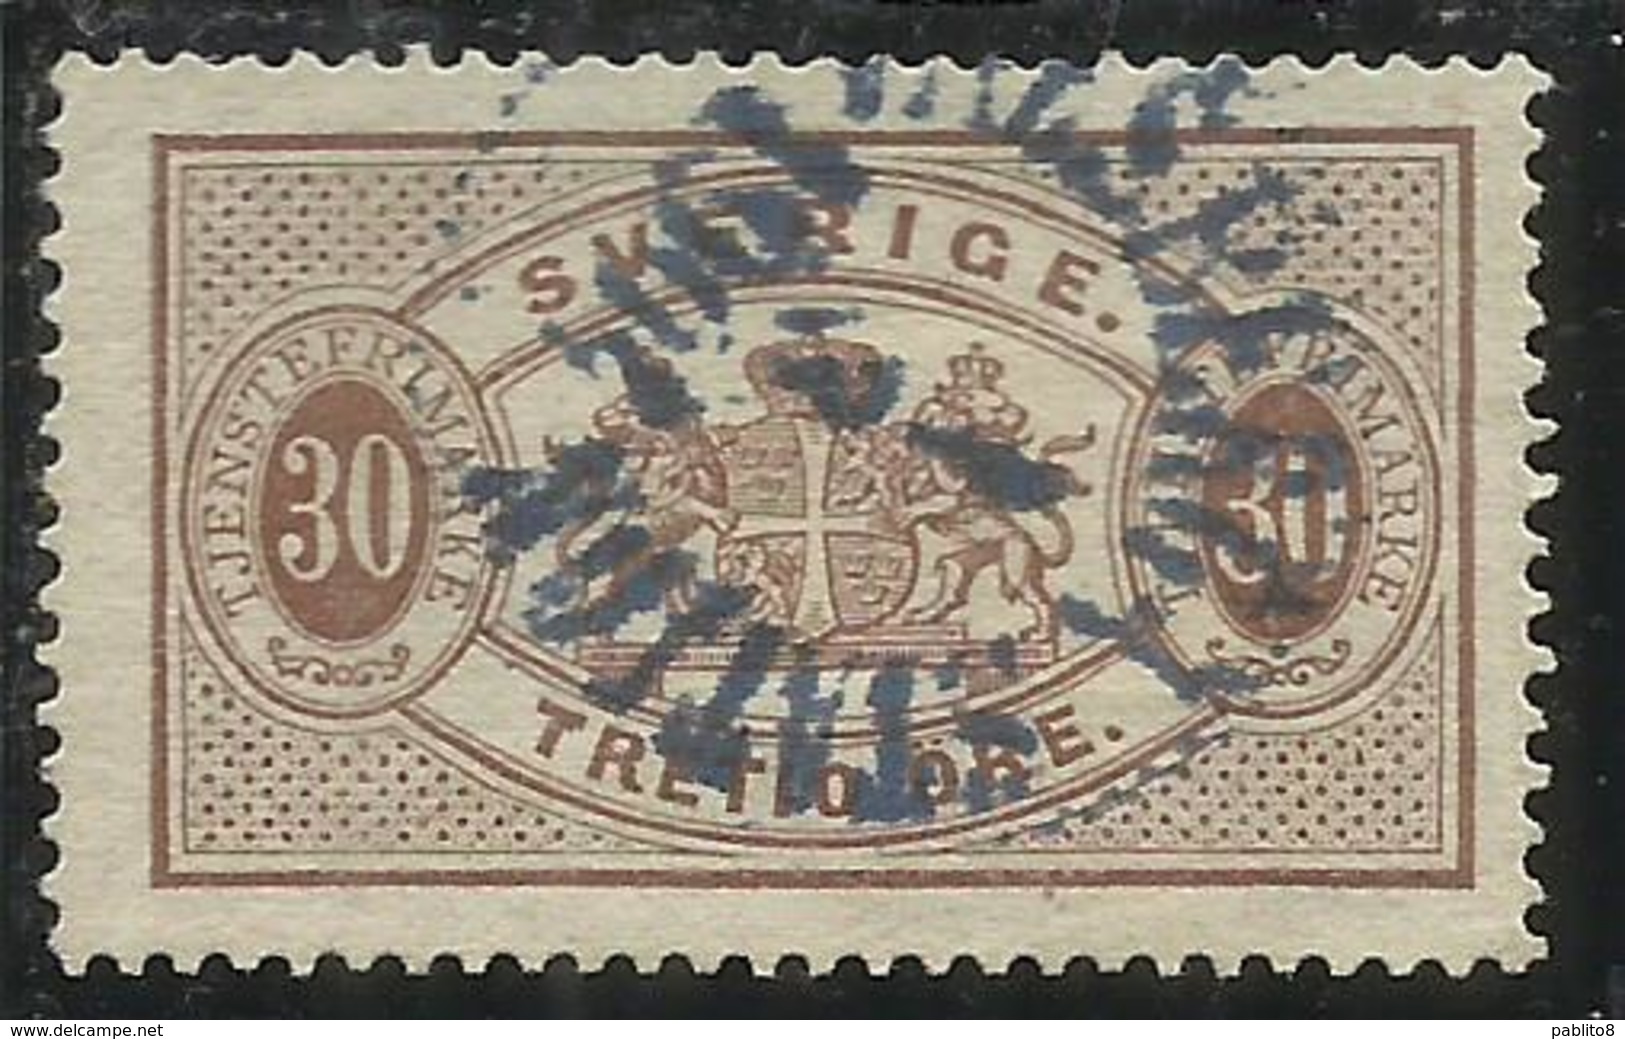 SWEDEN SVERIGE SVEZIA SUEDE 1874 1877 OFFICIAL STAMPS ORE 30o USATO USED OBLITERE' - Fiscaux